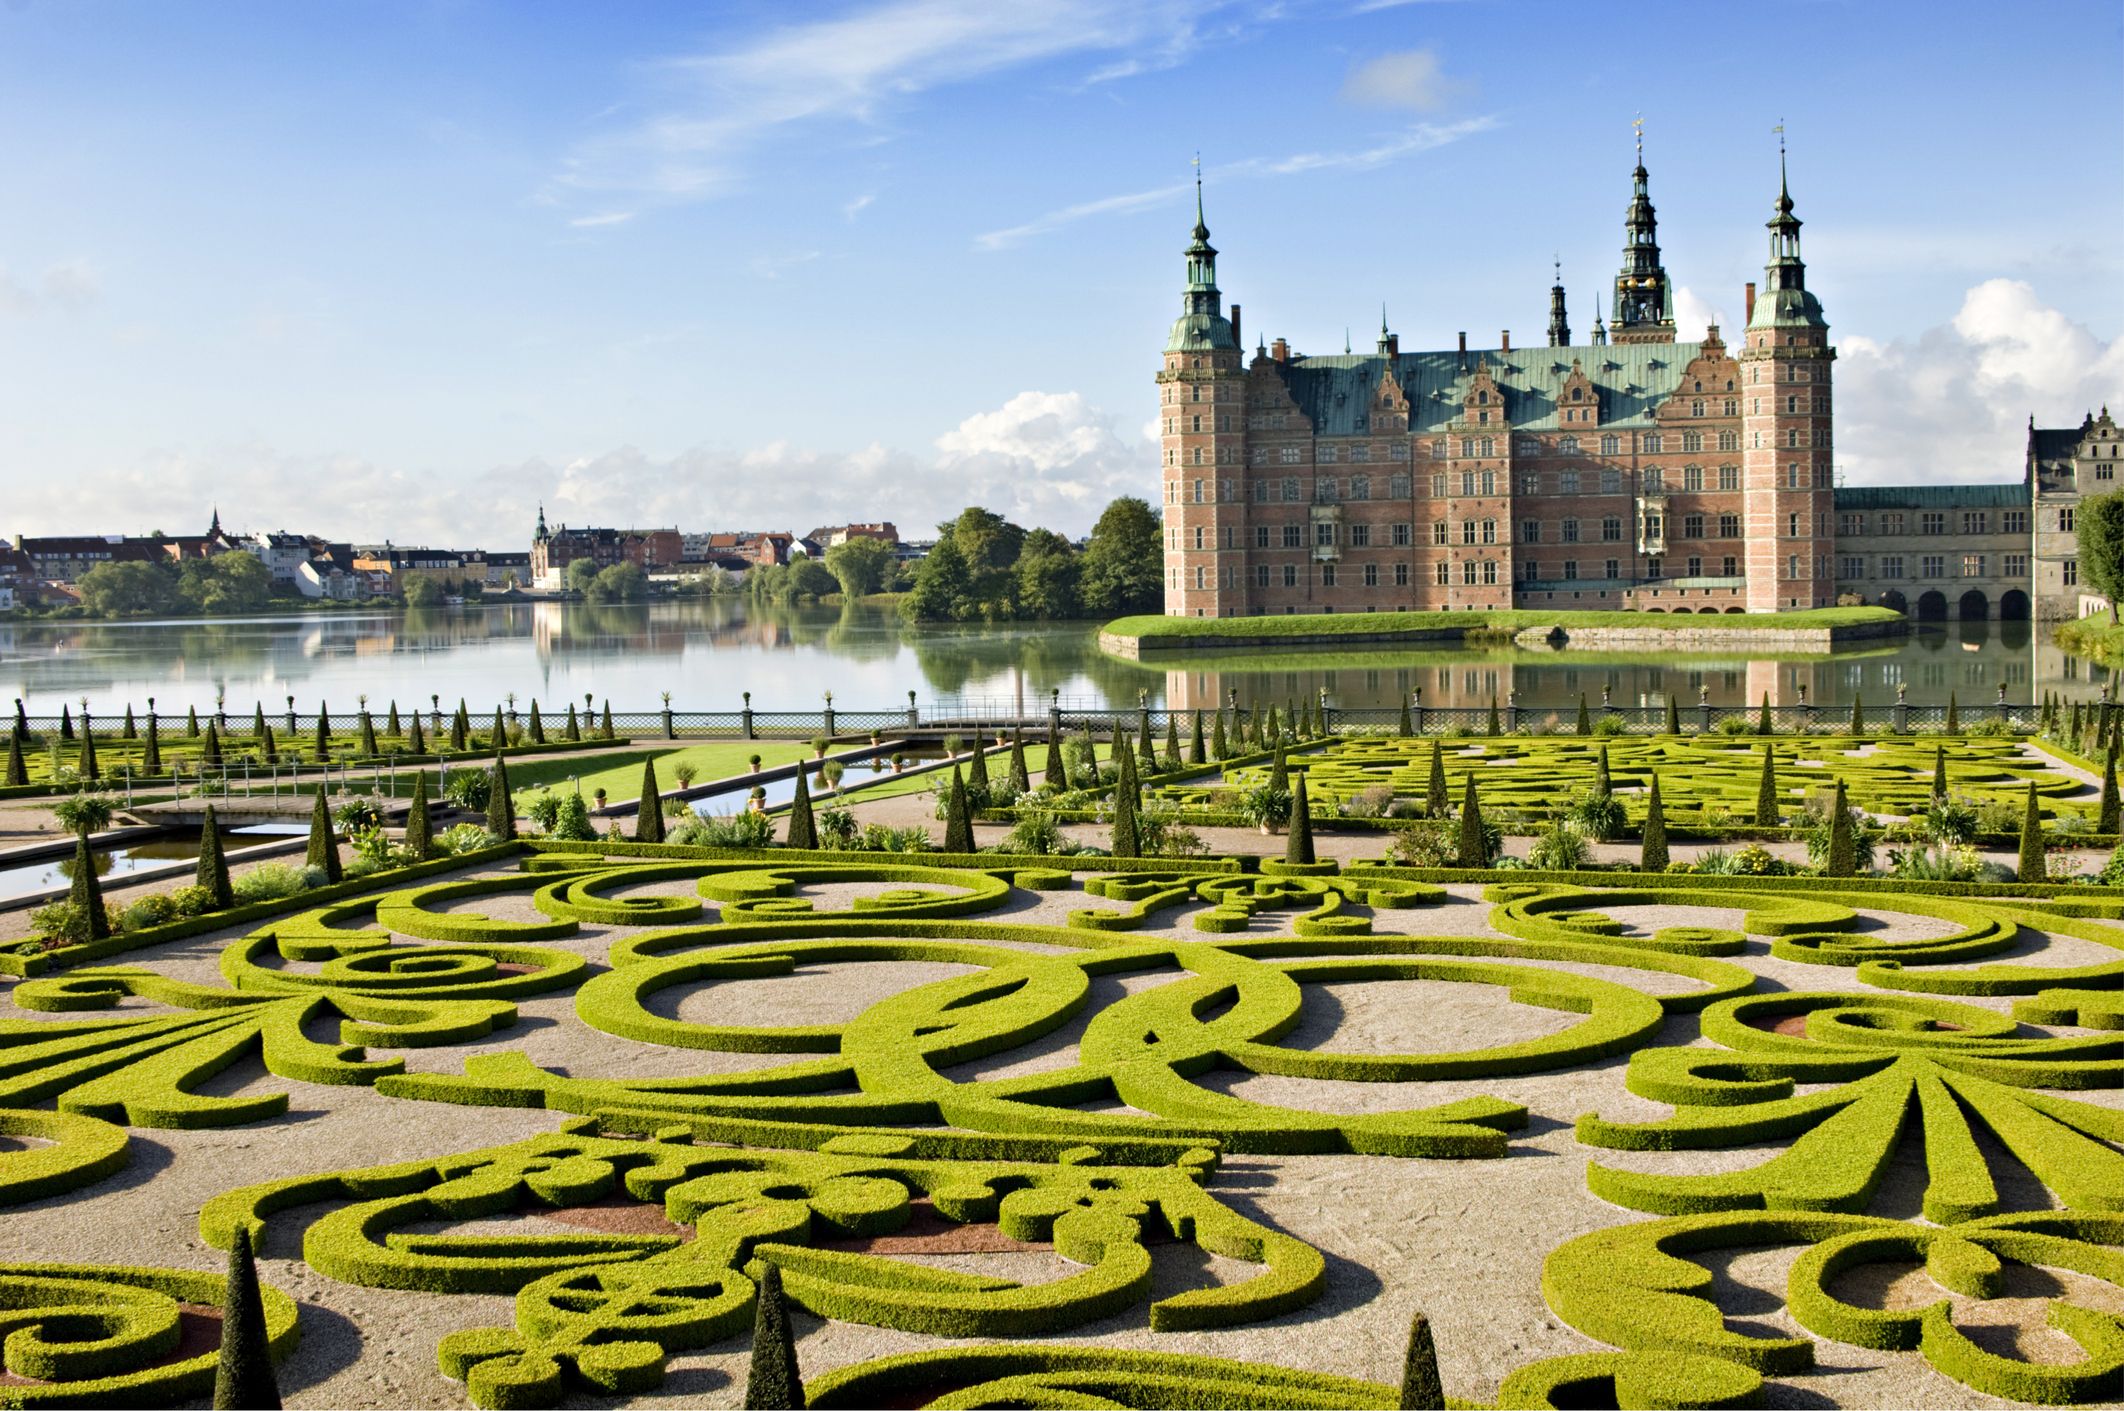 https://hips.hearstapps.com/hmg-prod/images/frederiksborg-castle-and-gardens-hilleroed-denmark-royalty-free-image-1575309964.jpg